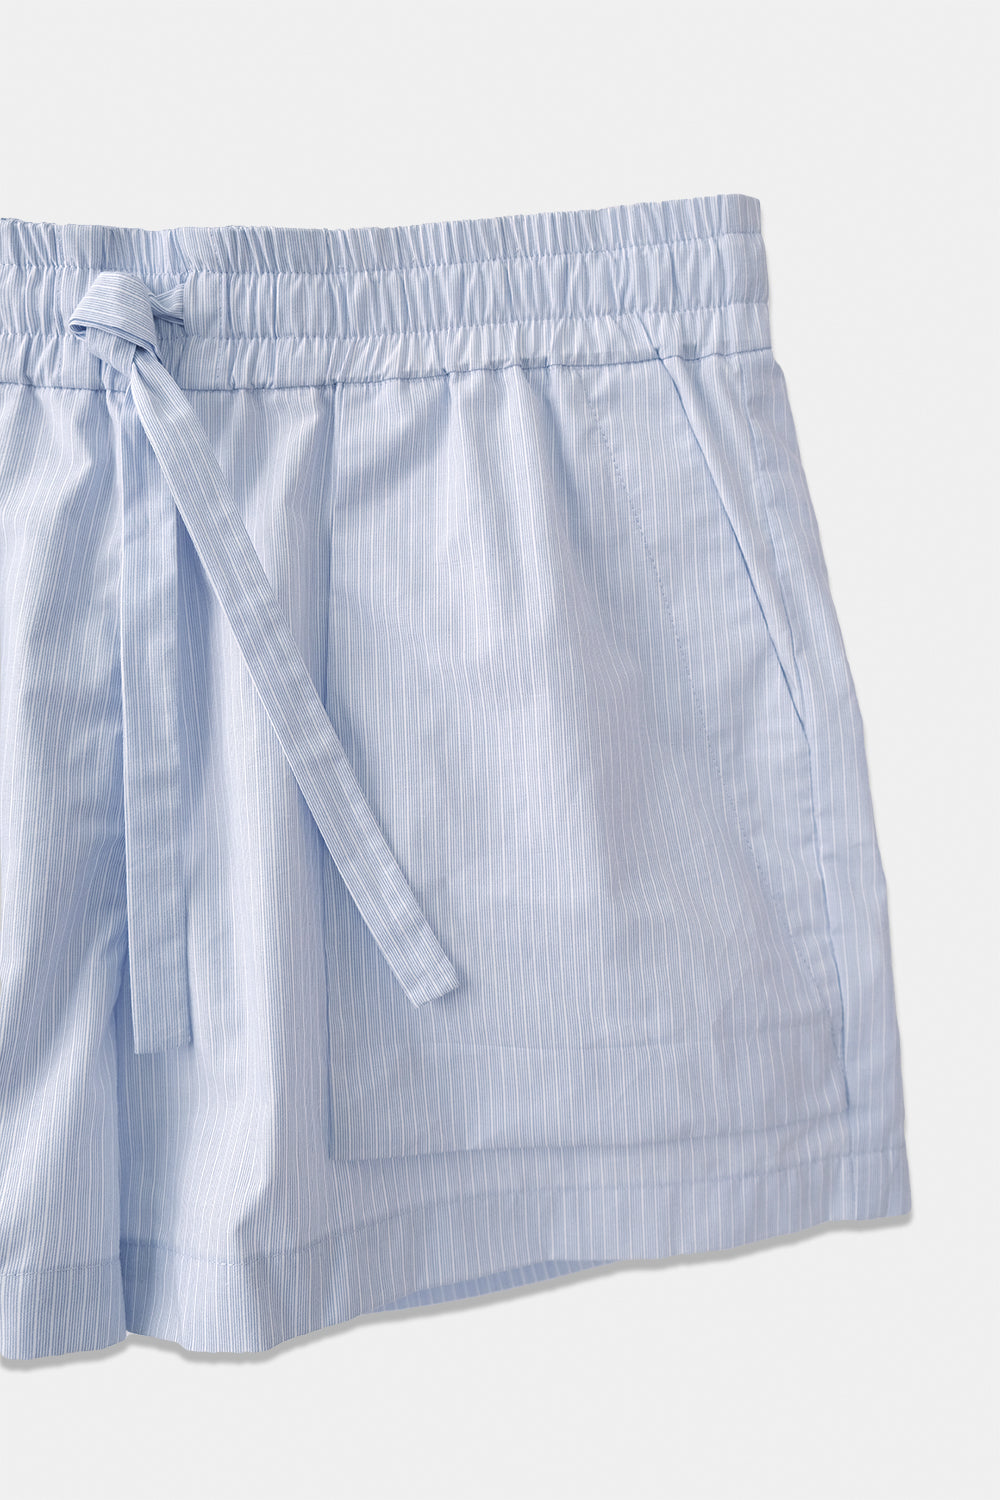 SEANNUNG - MEN - Striped Elastic Shorts 直條鬆緊綁帶短褲